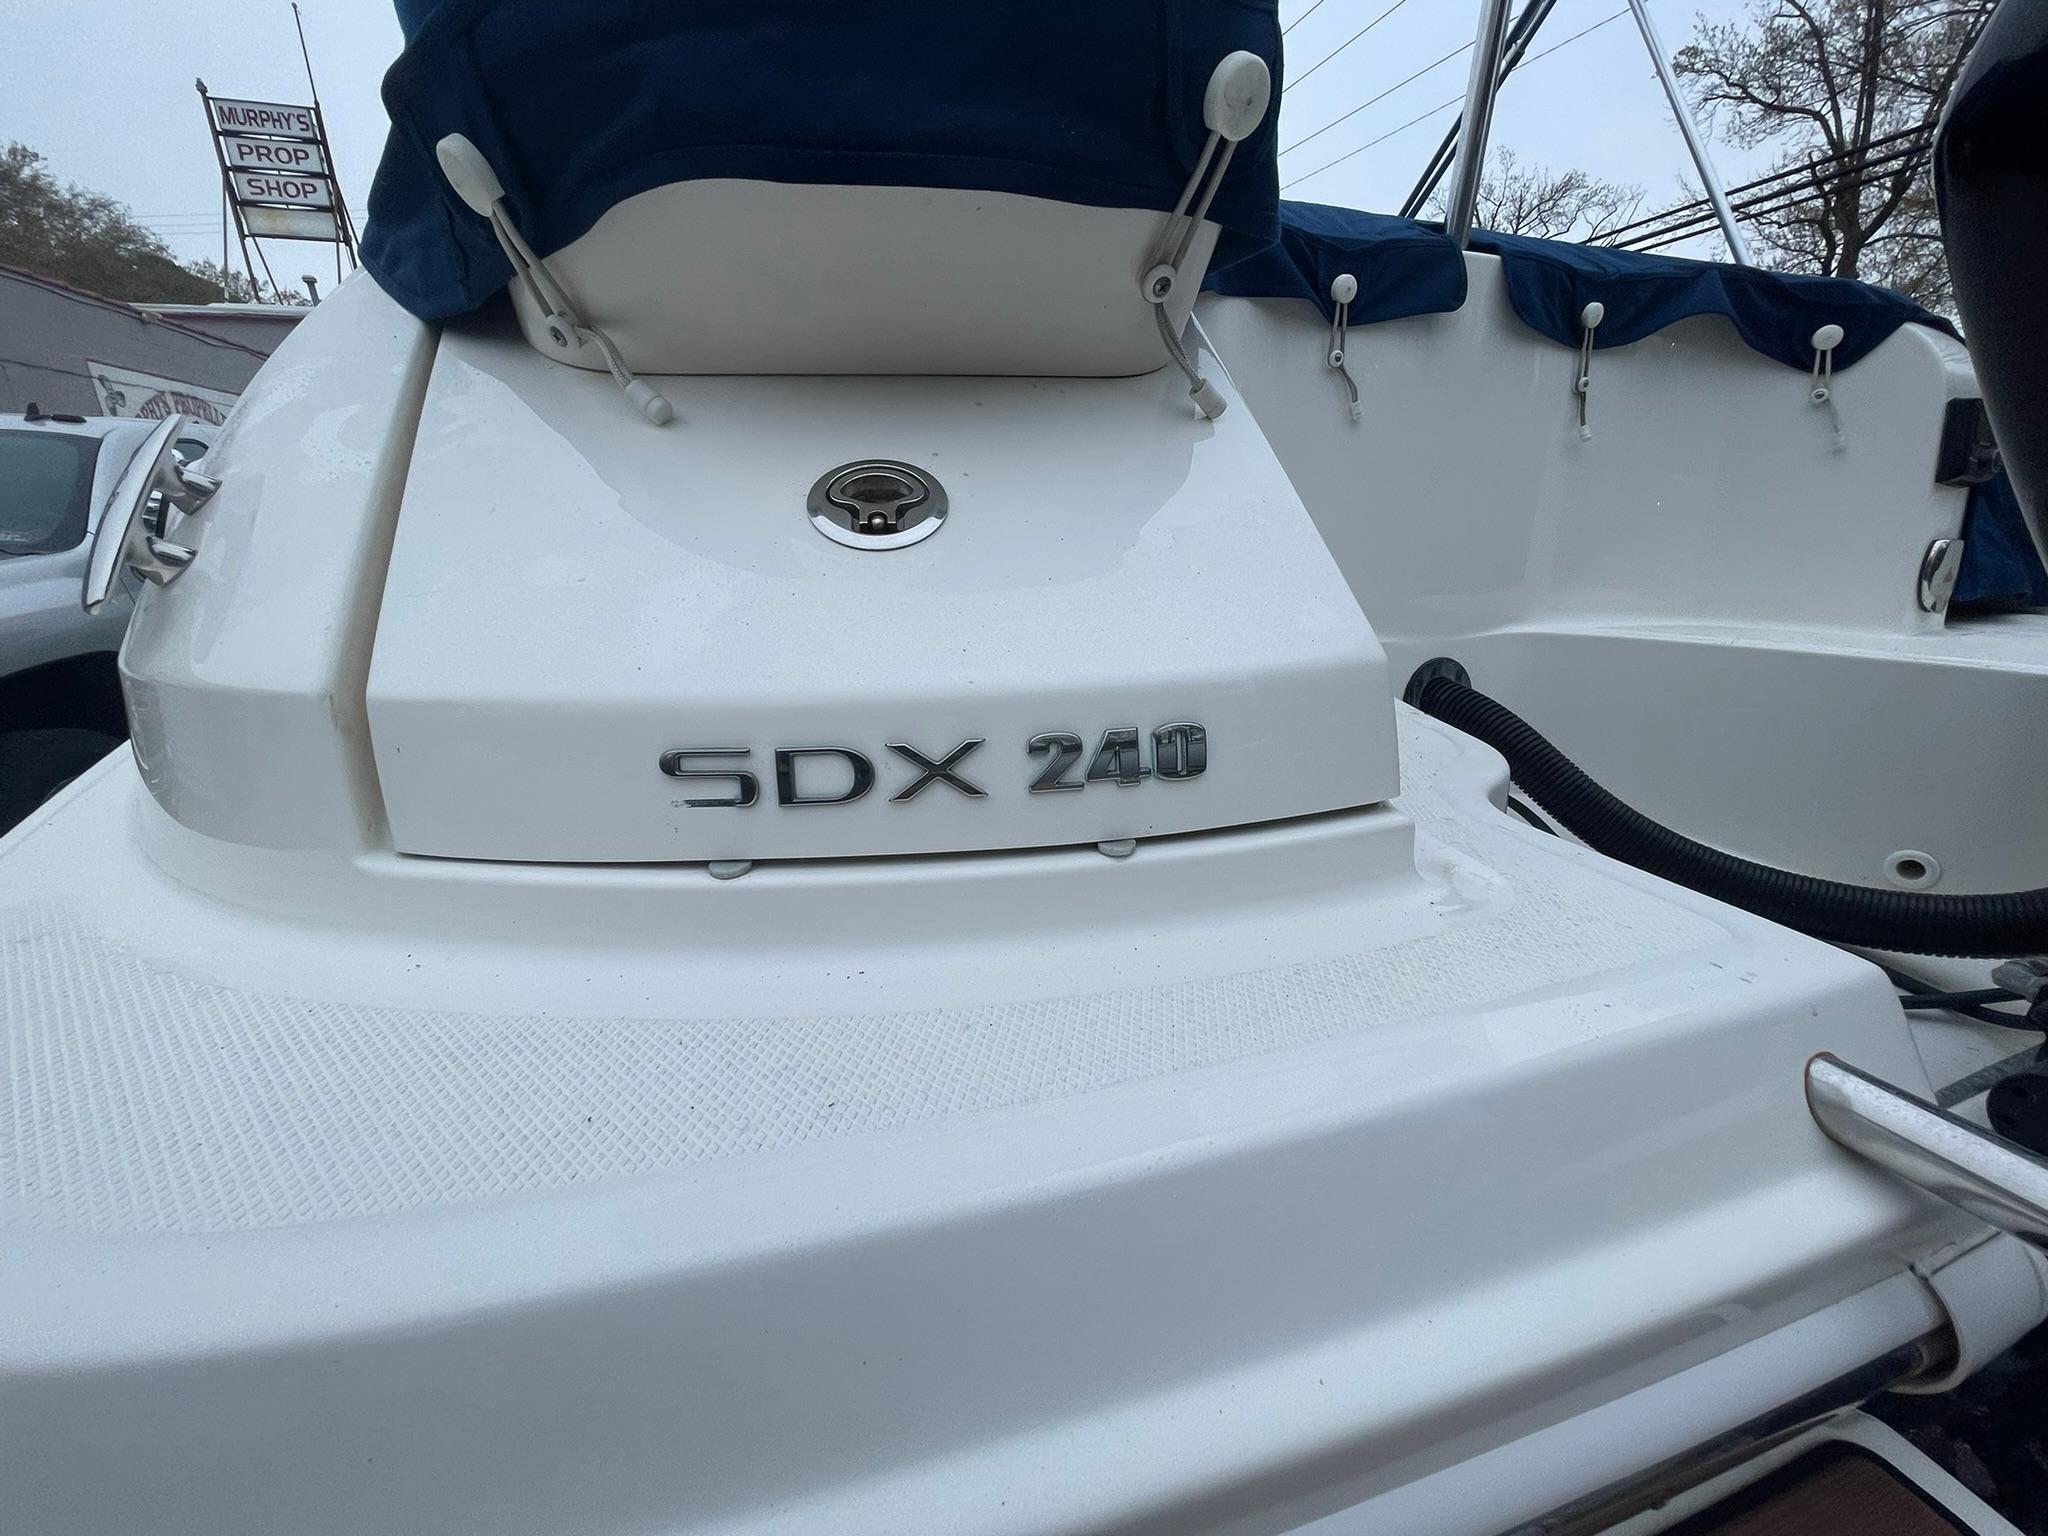 2017 Sea Ray SDX 240 Outboard